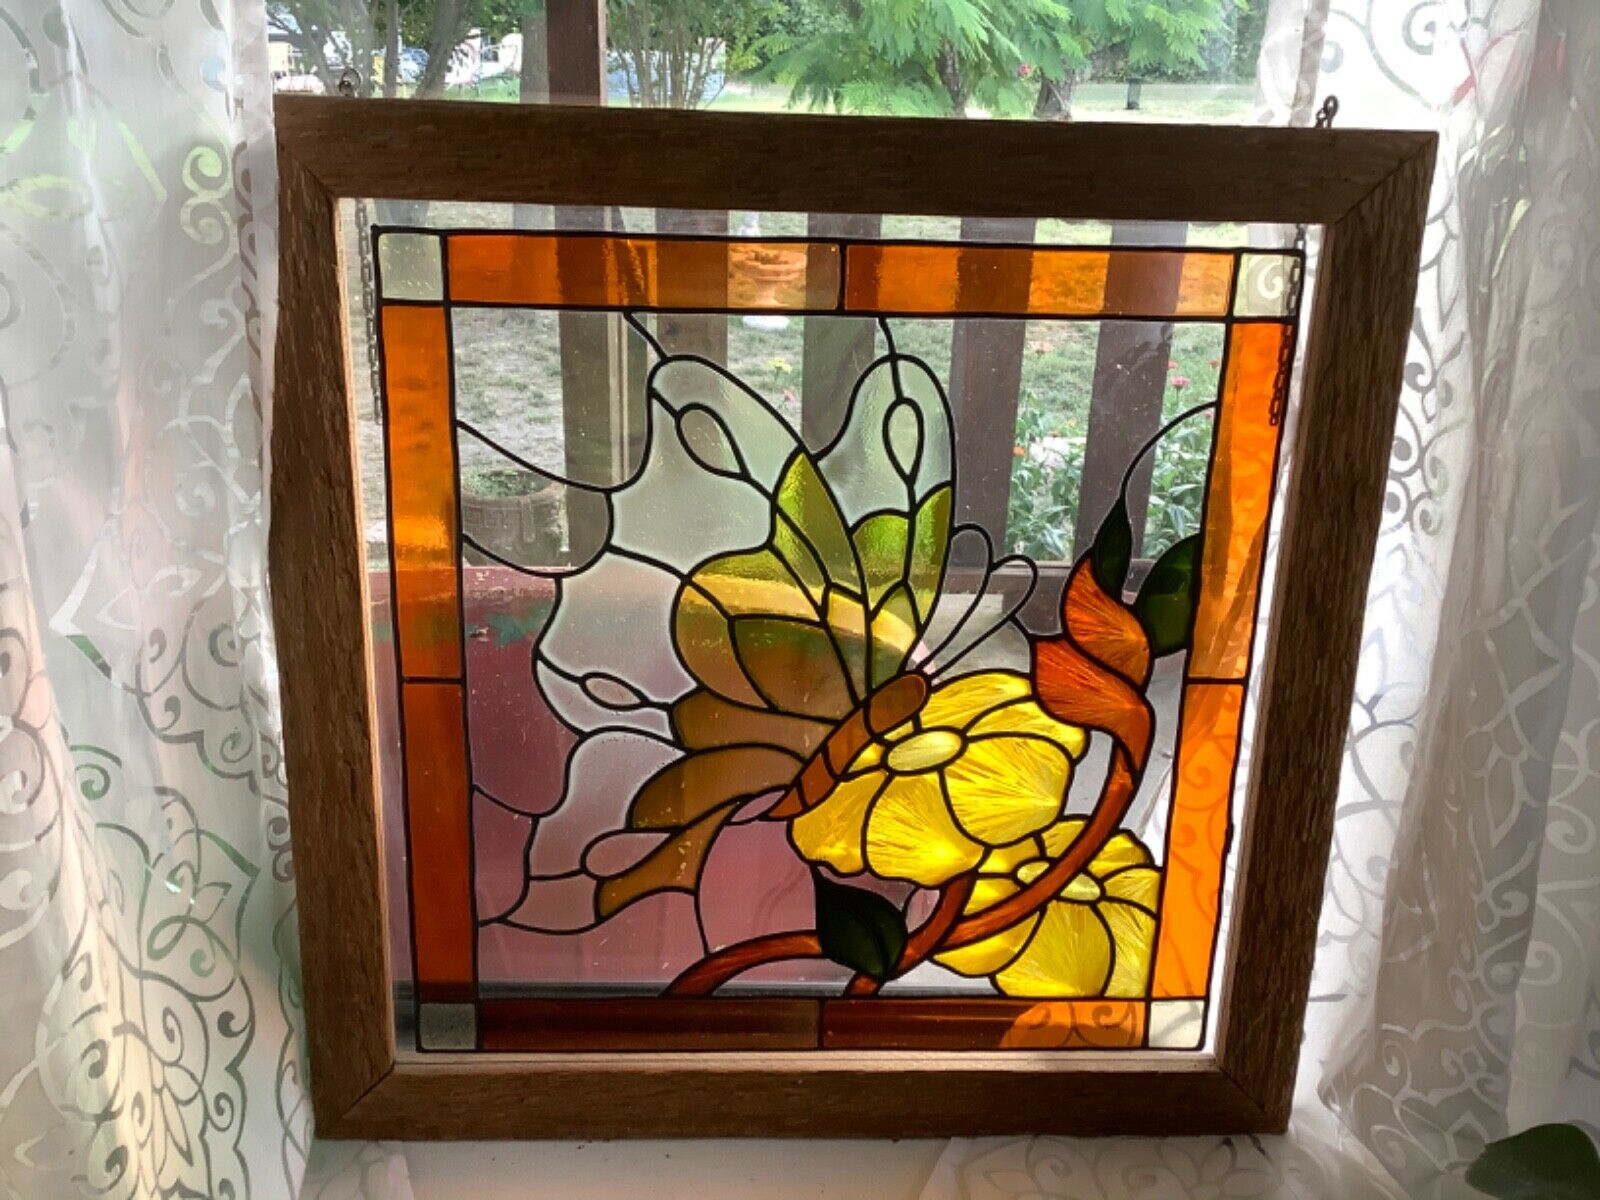 Vtg mid century stained glass leaded window panel Butterfly Garden Flower